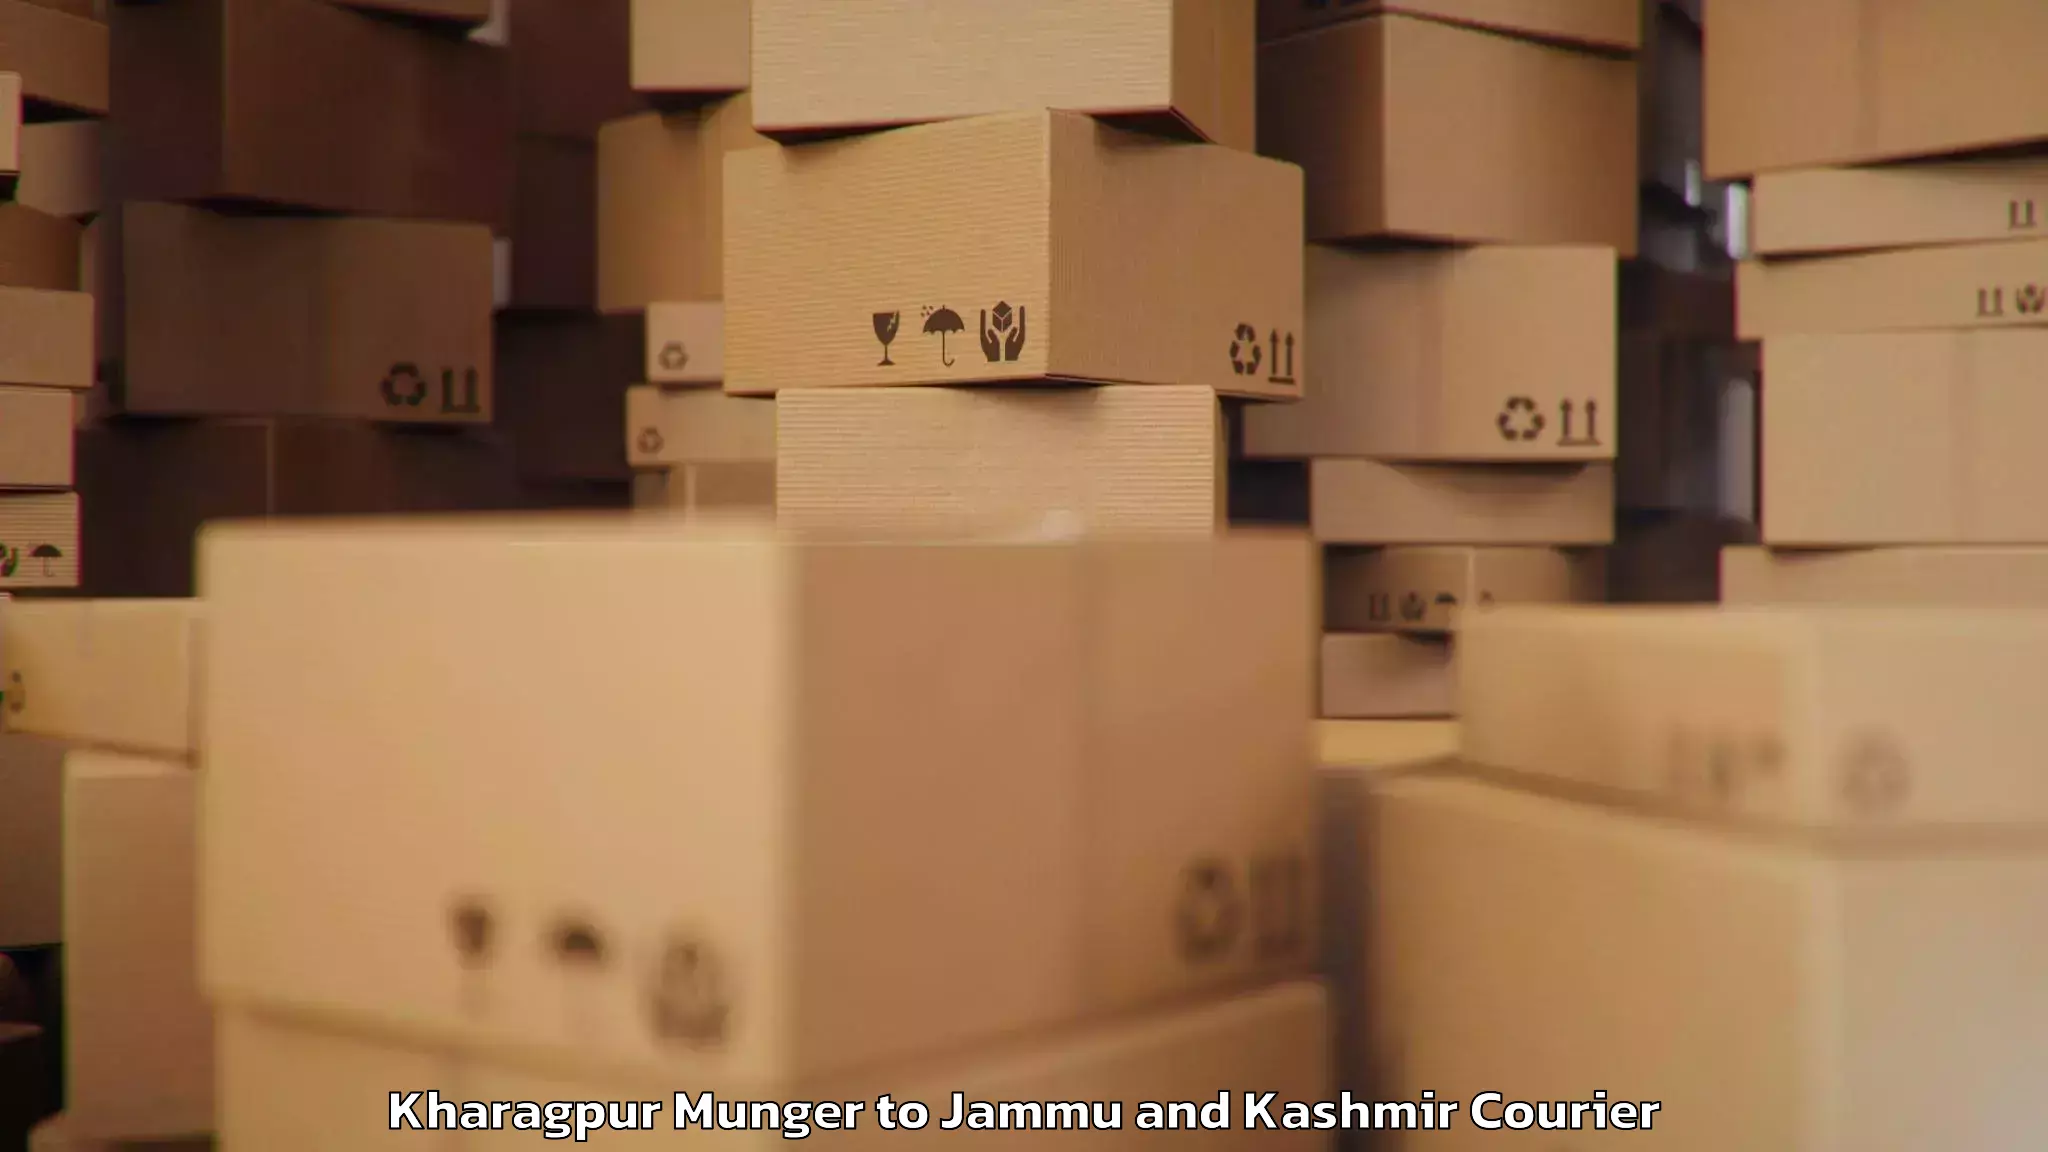 Baggage transport professionals Kharagpur Munger to Srinagar Kashmir